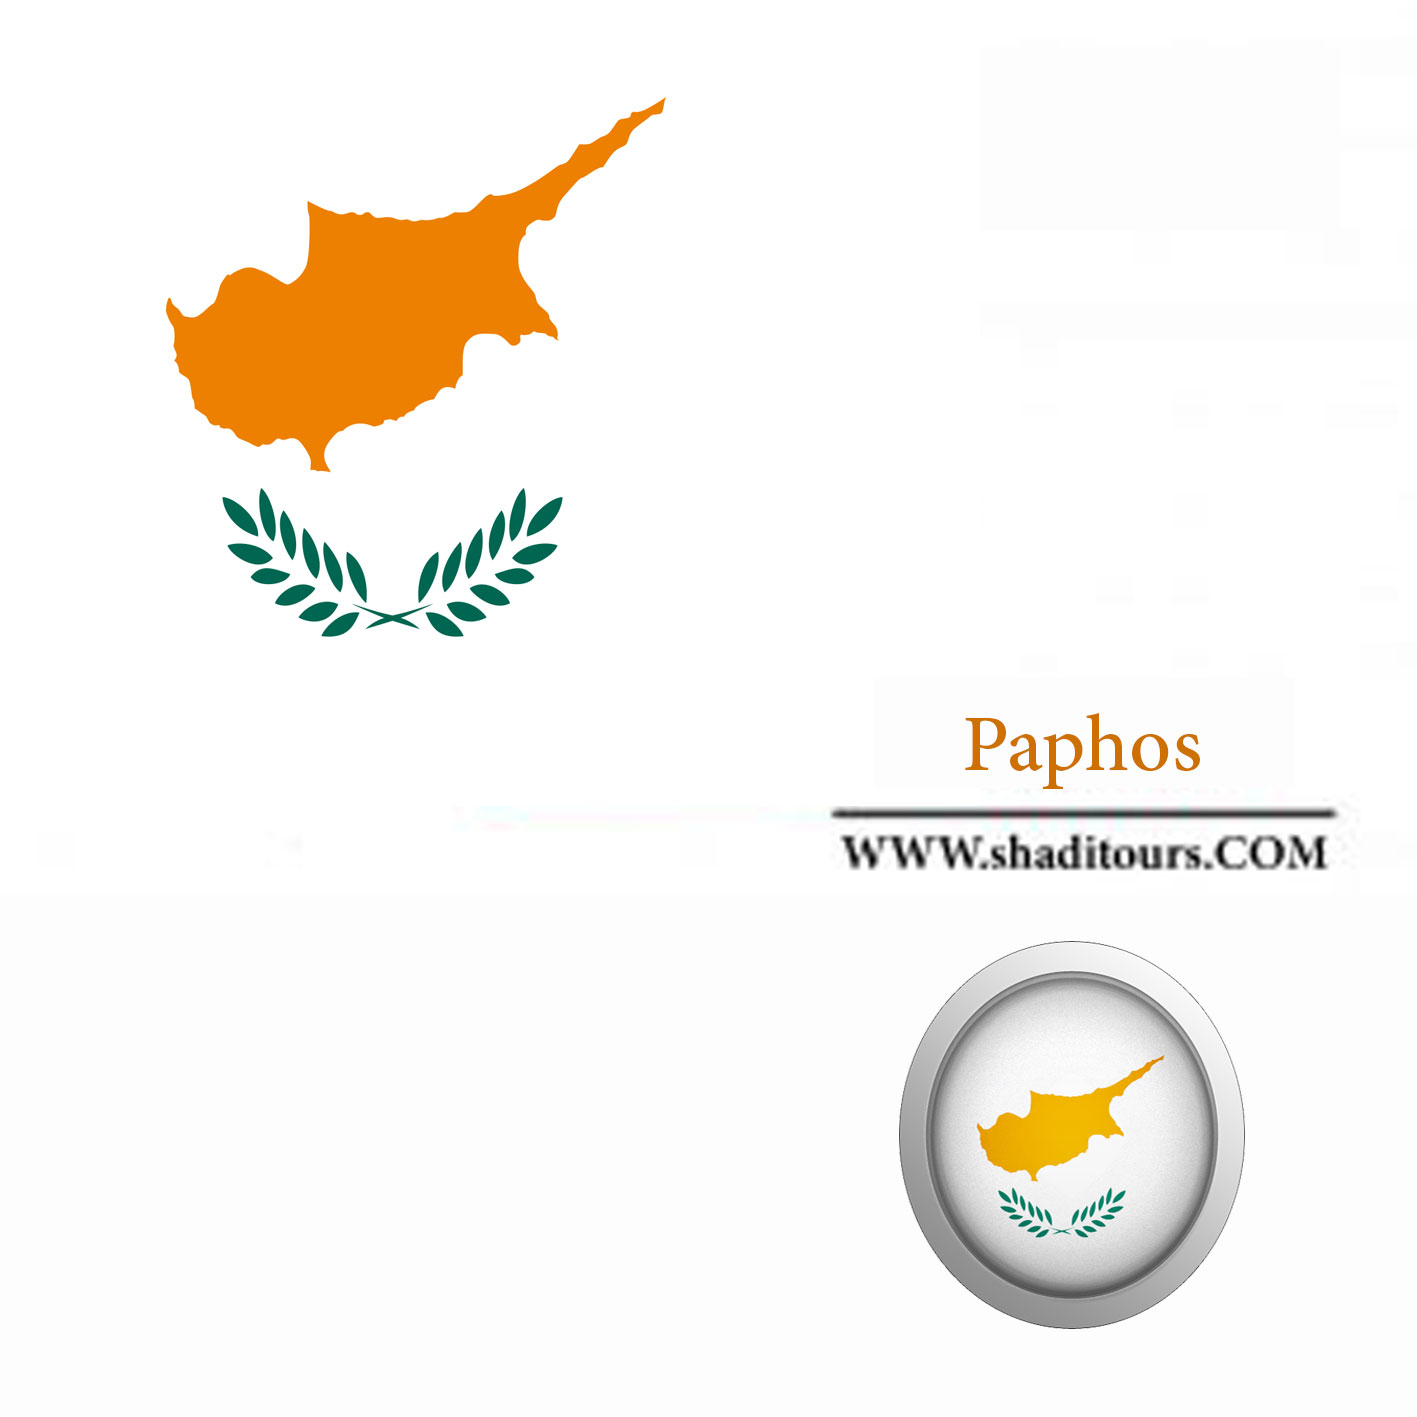 paphos-shaditours